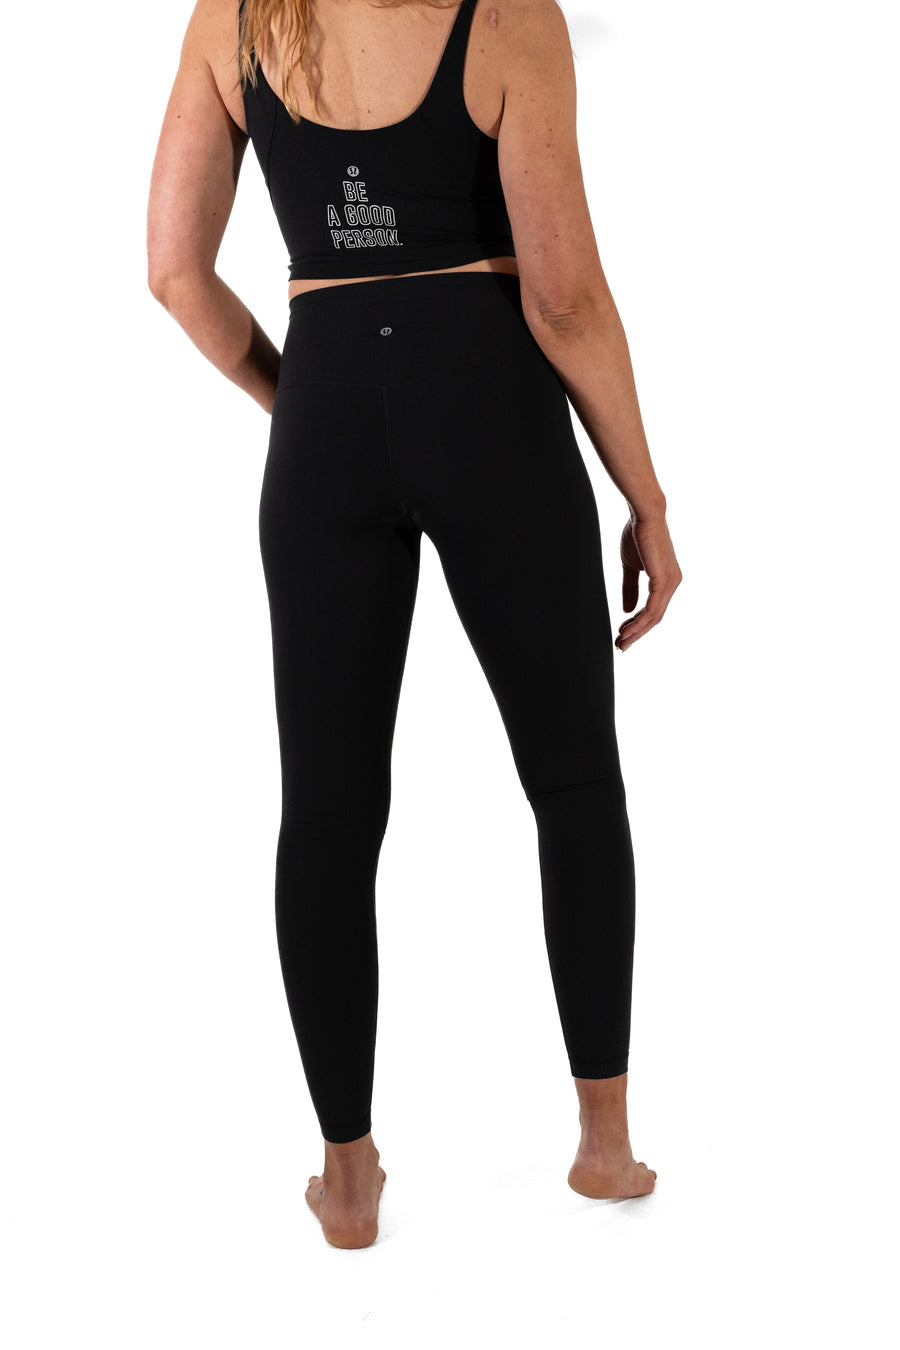 Lululemon Align Pant Full Length Yoga Pants Black, India